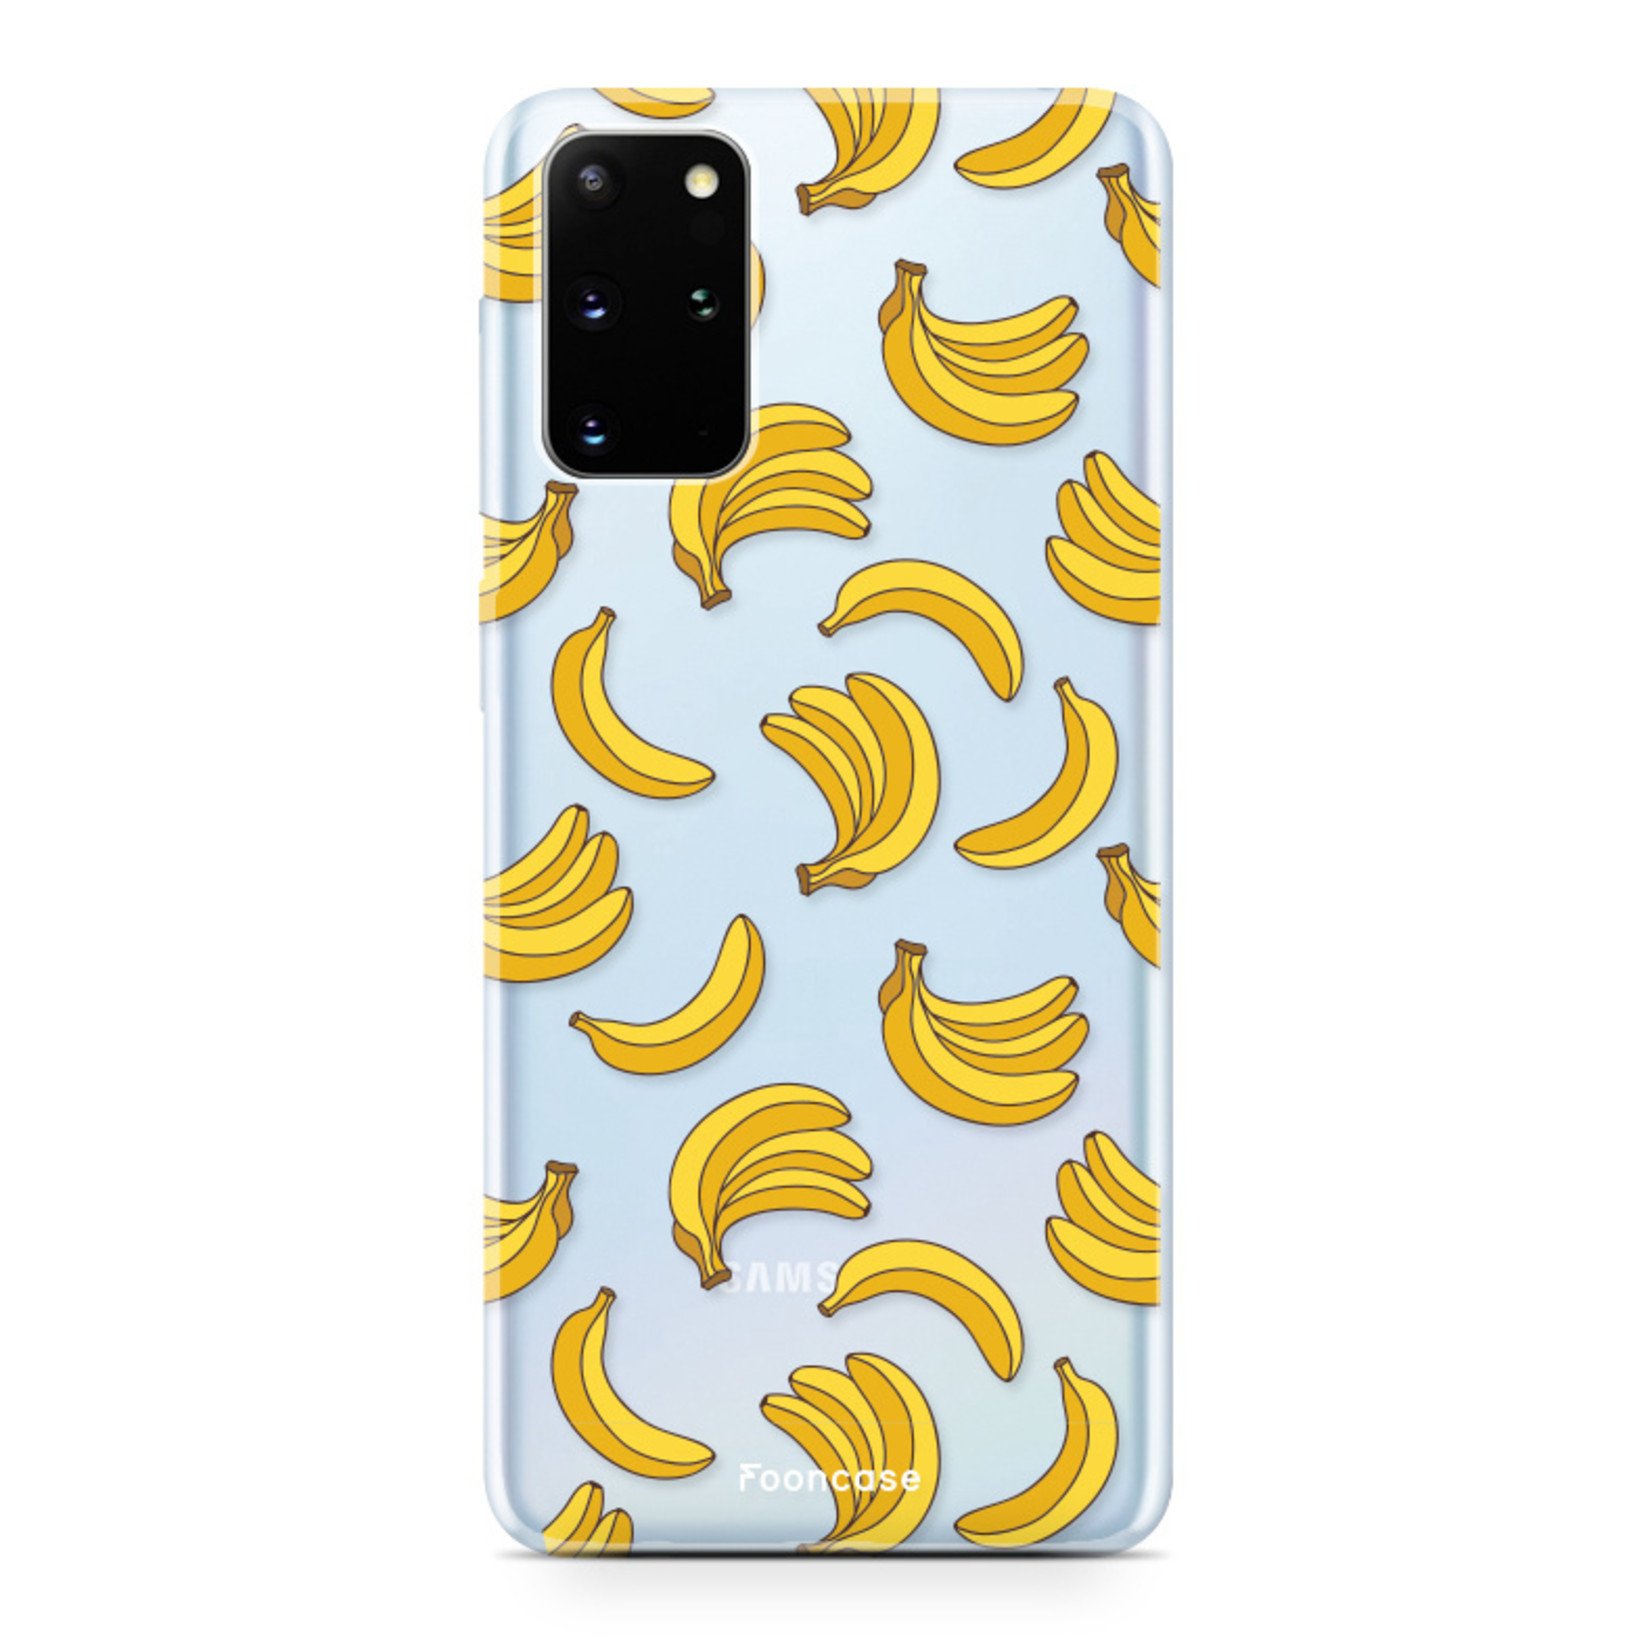 FOONCASE Samsung Galaxy S20 Plus hoesje TPU Soft Case - Back Cover - Bananas / Banaan / Bananen